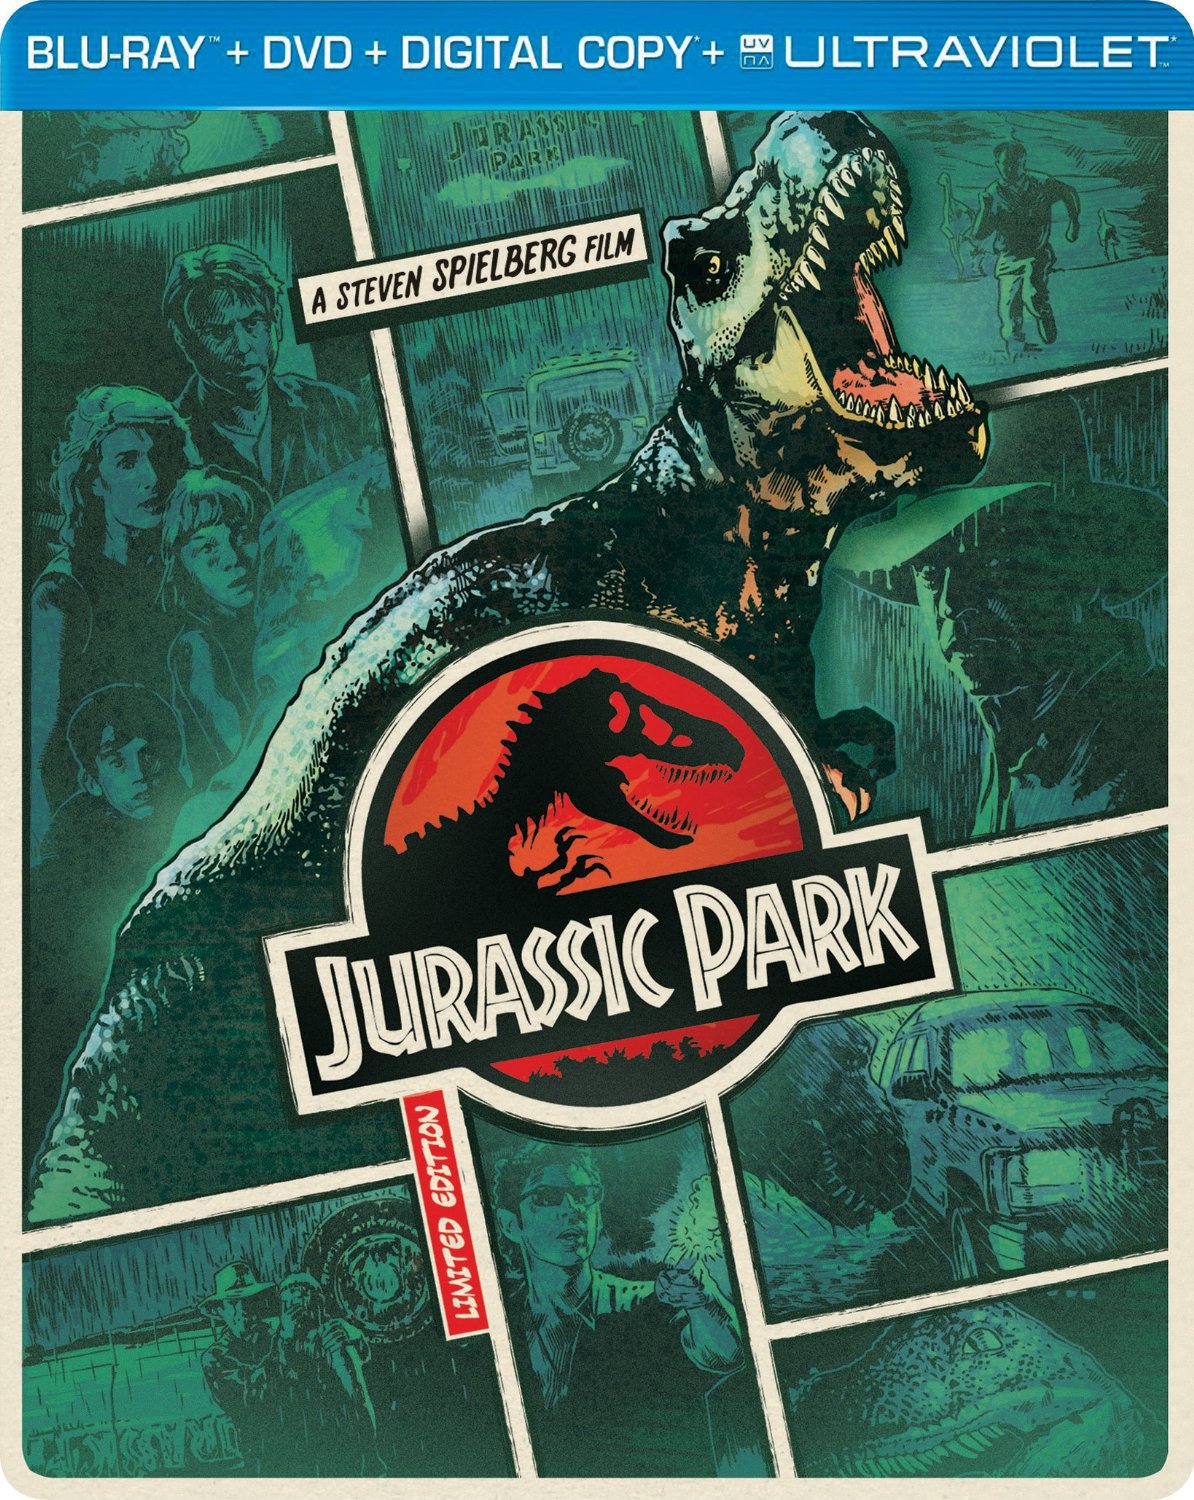 Jurassic Park: Limited Edition